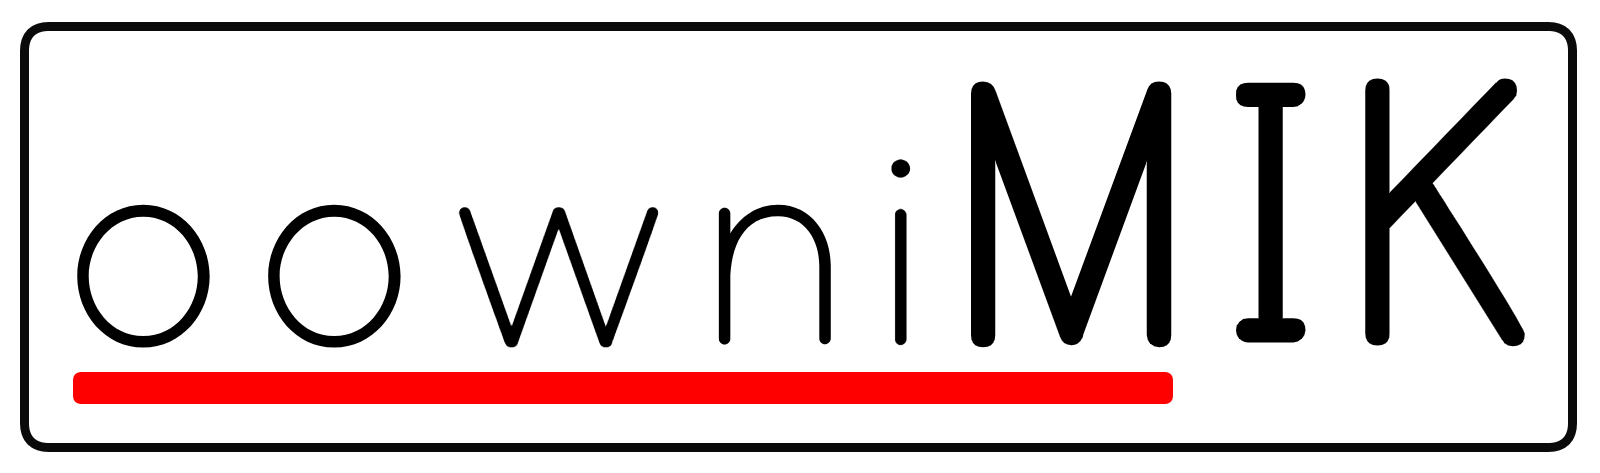 oownimik logo